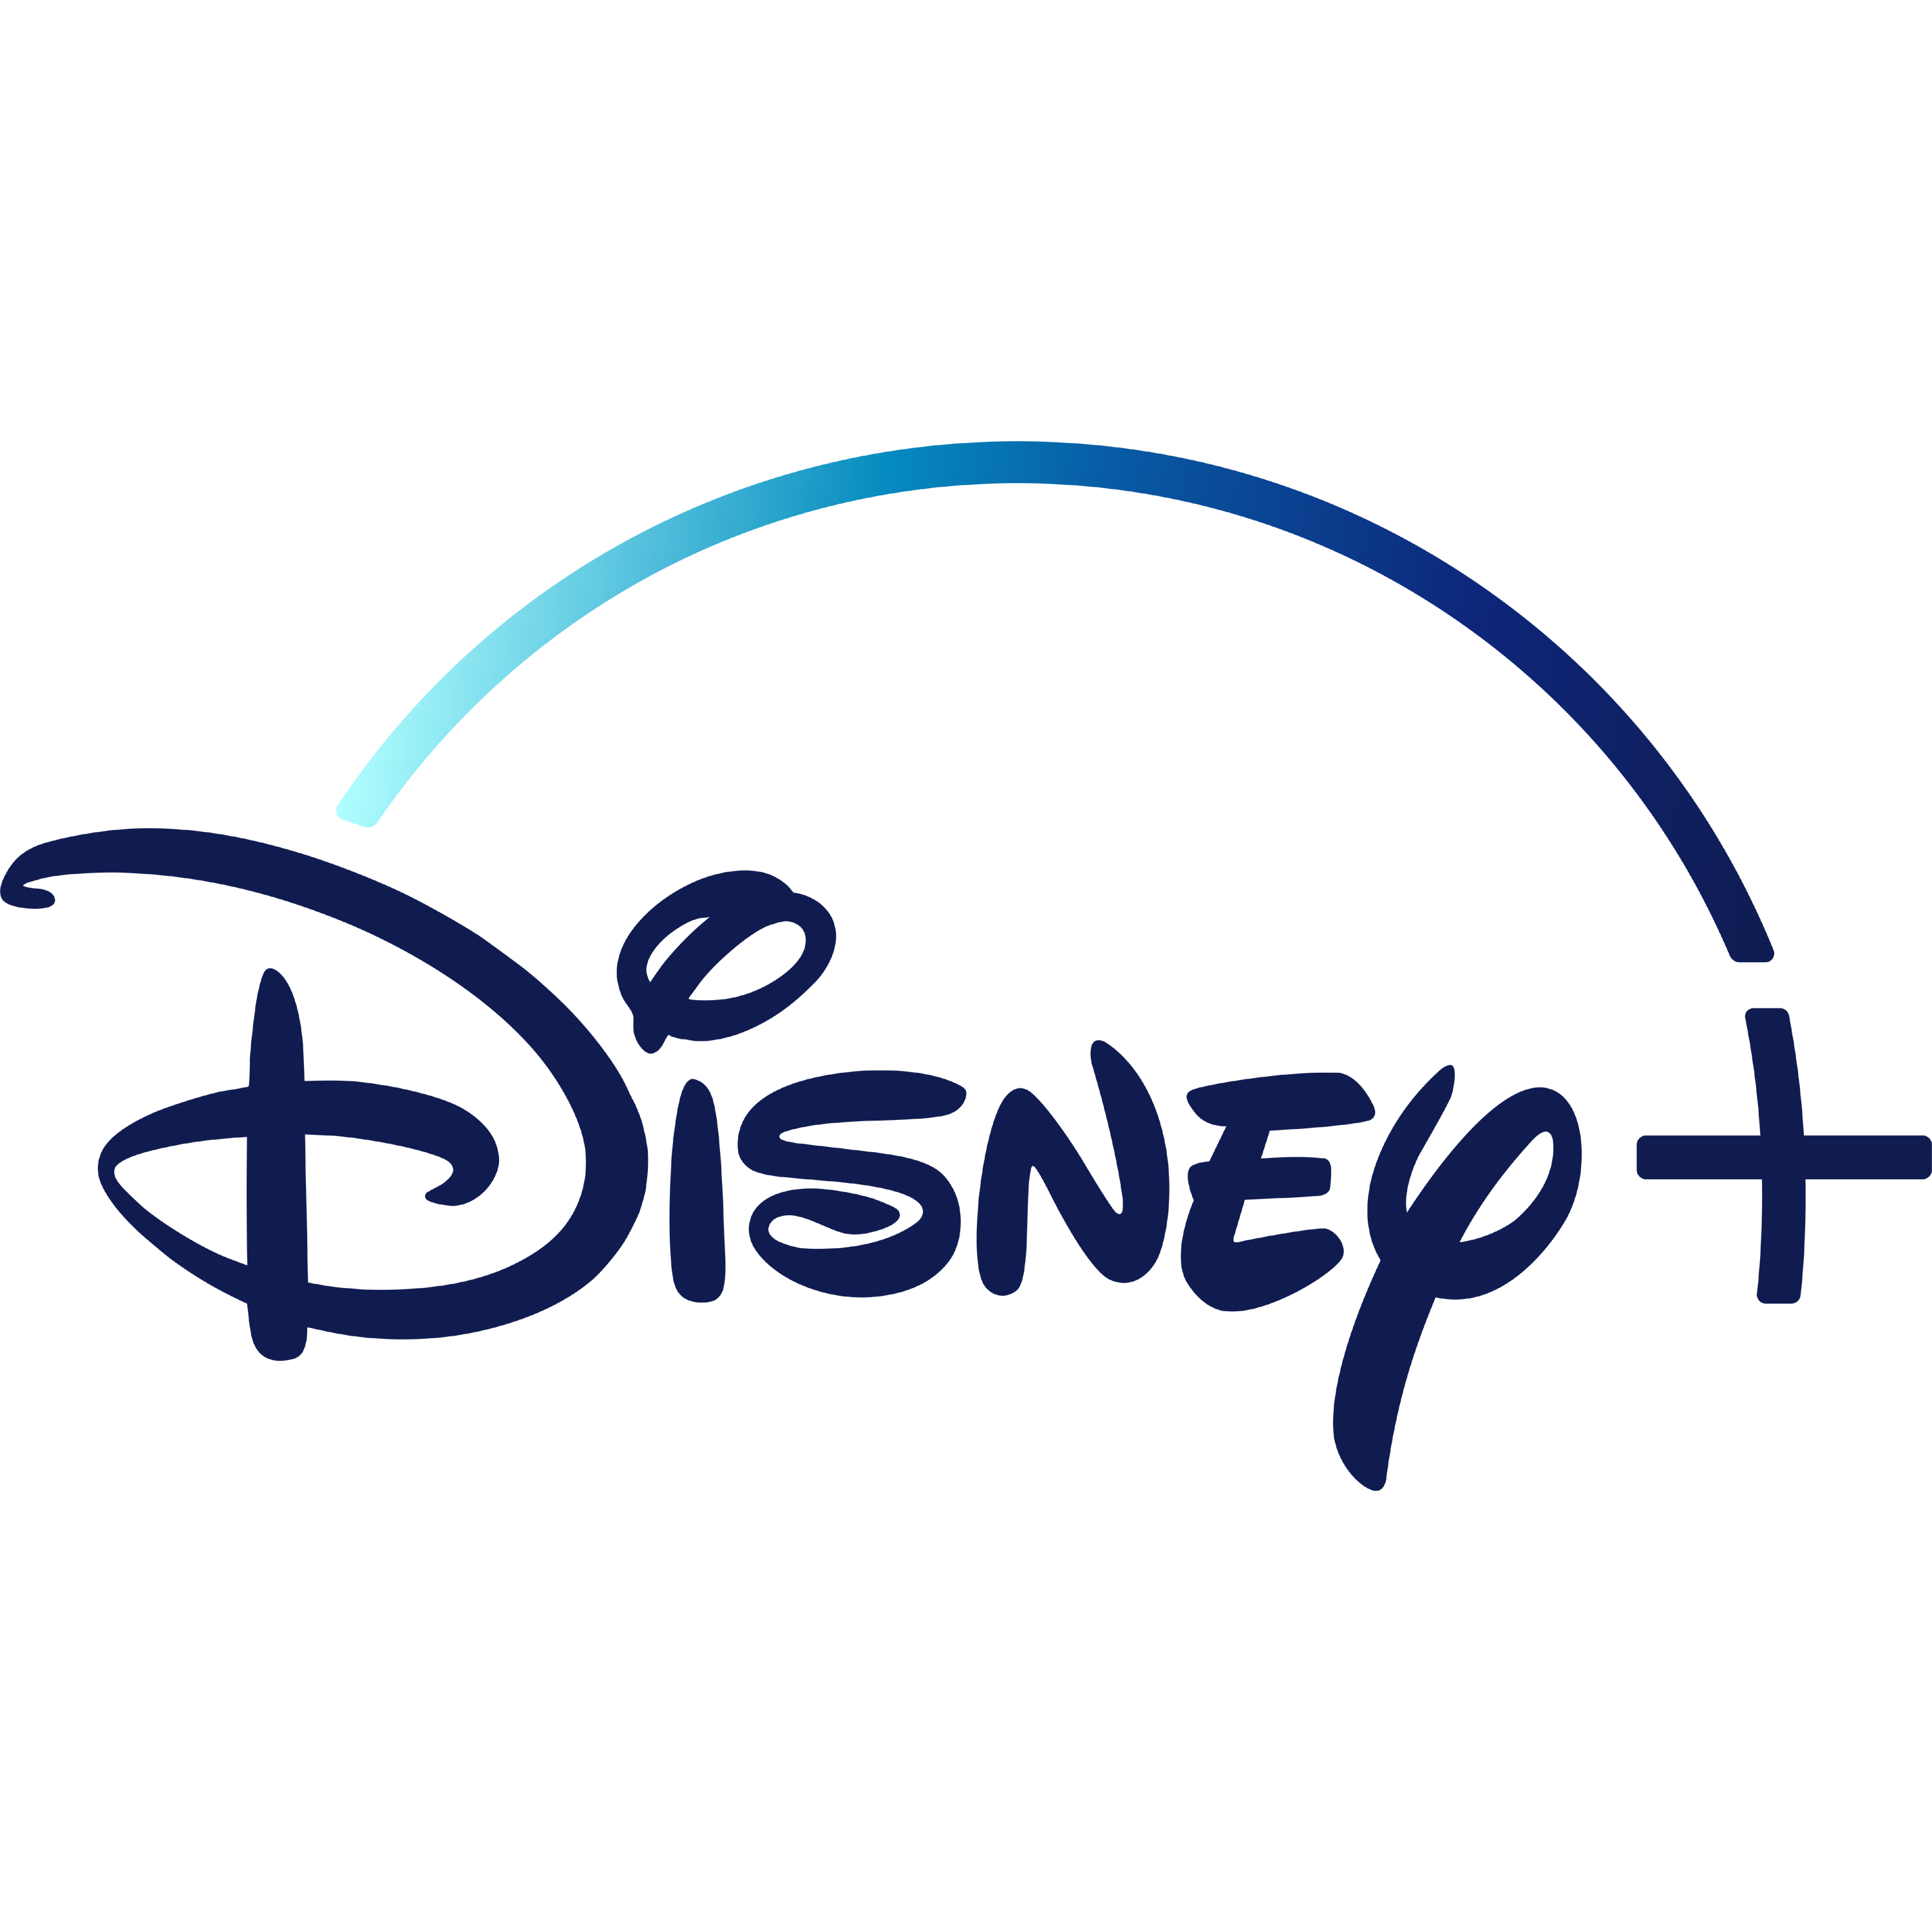 New disney plus logo